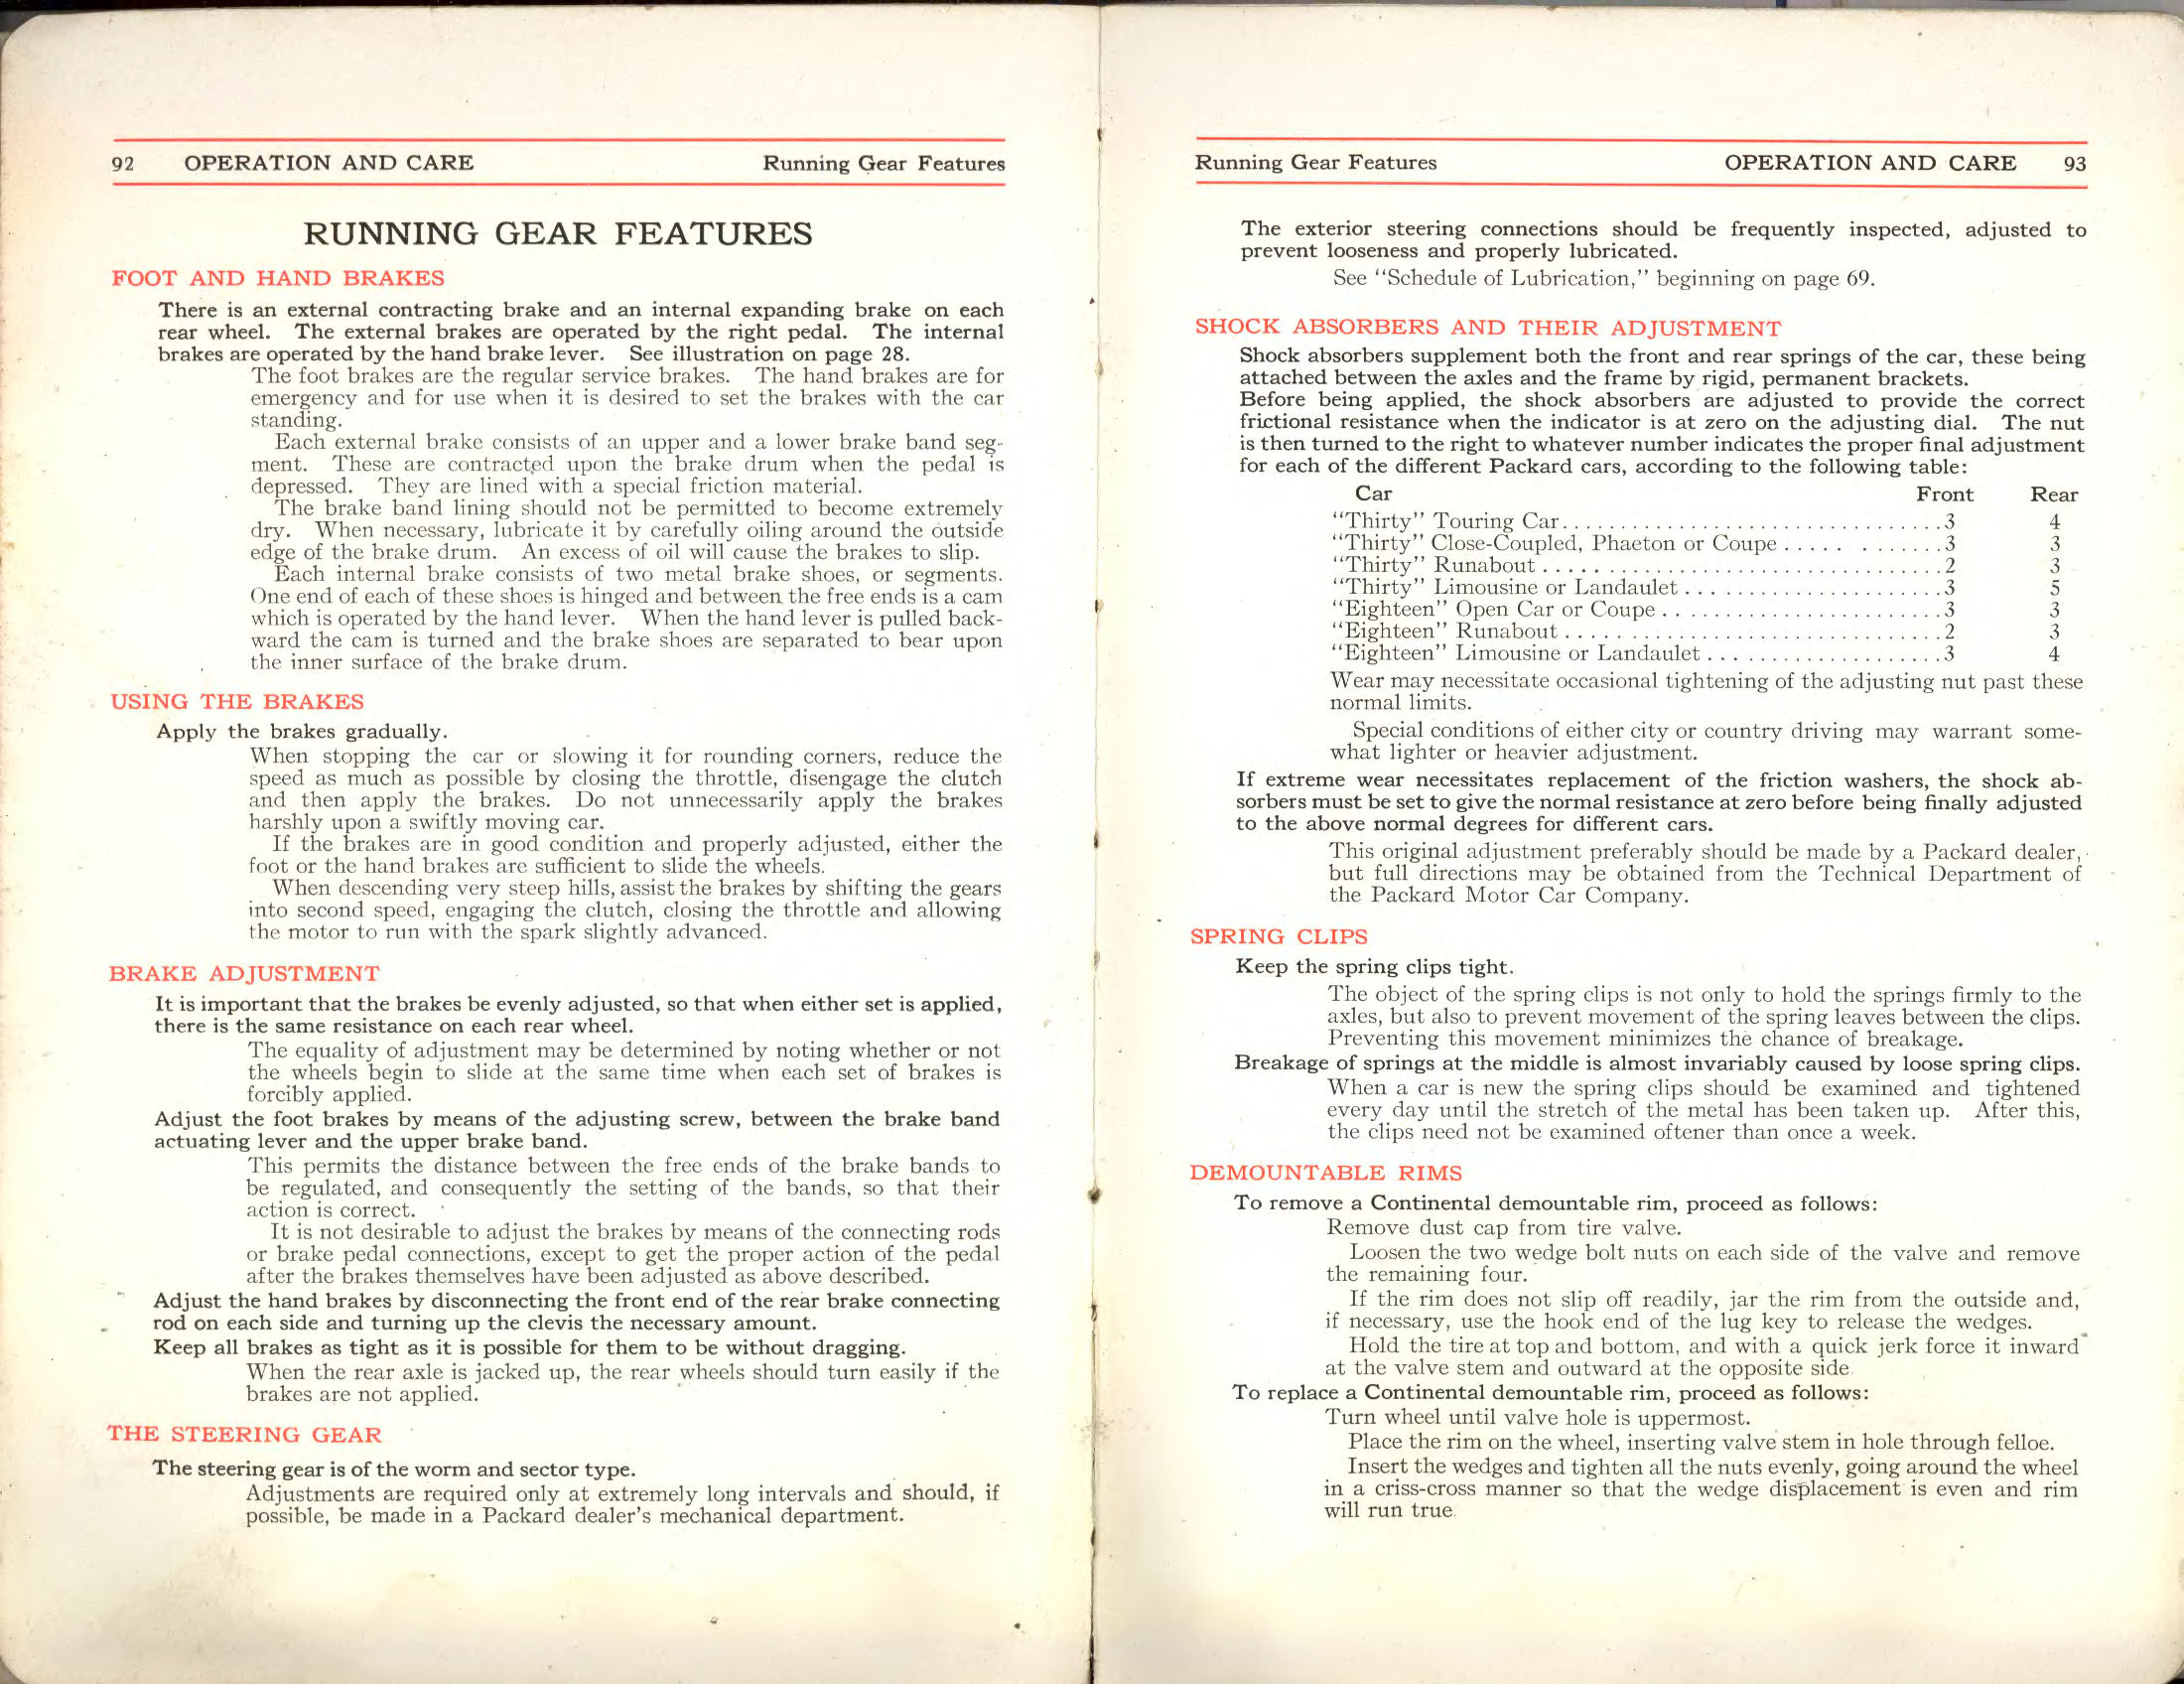 1911 Packard Manual-092-093